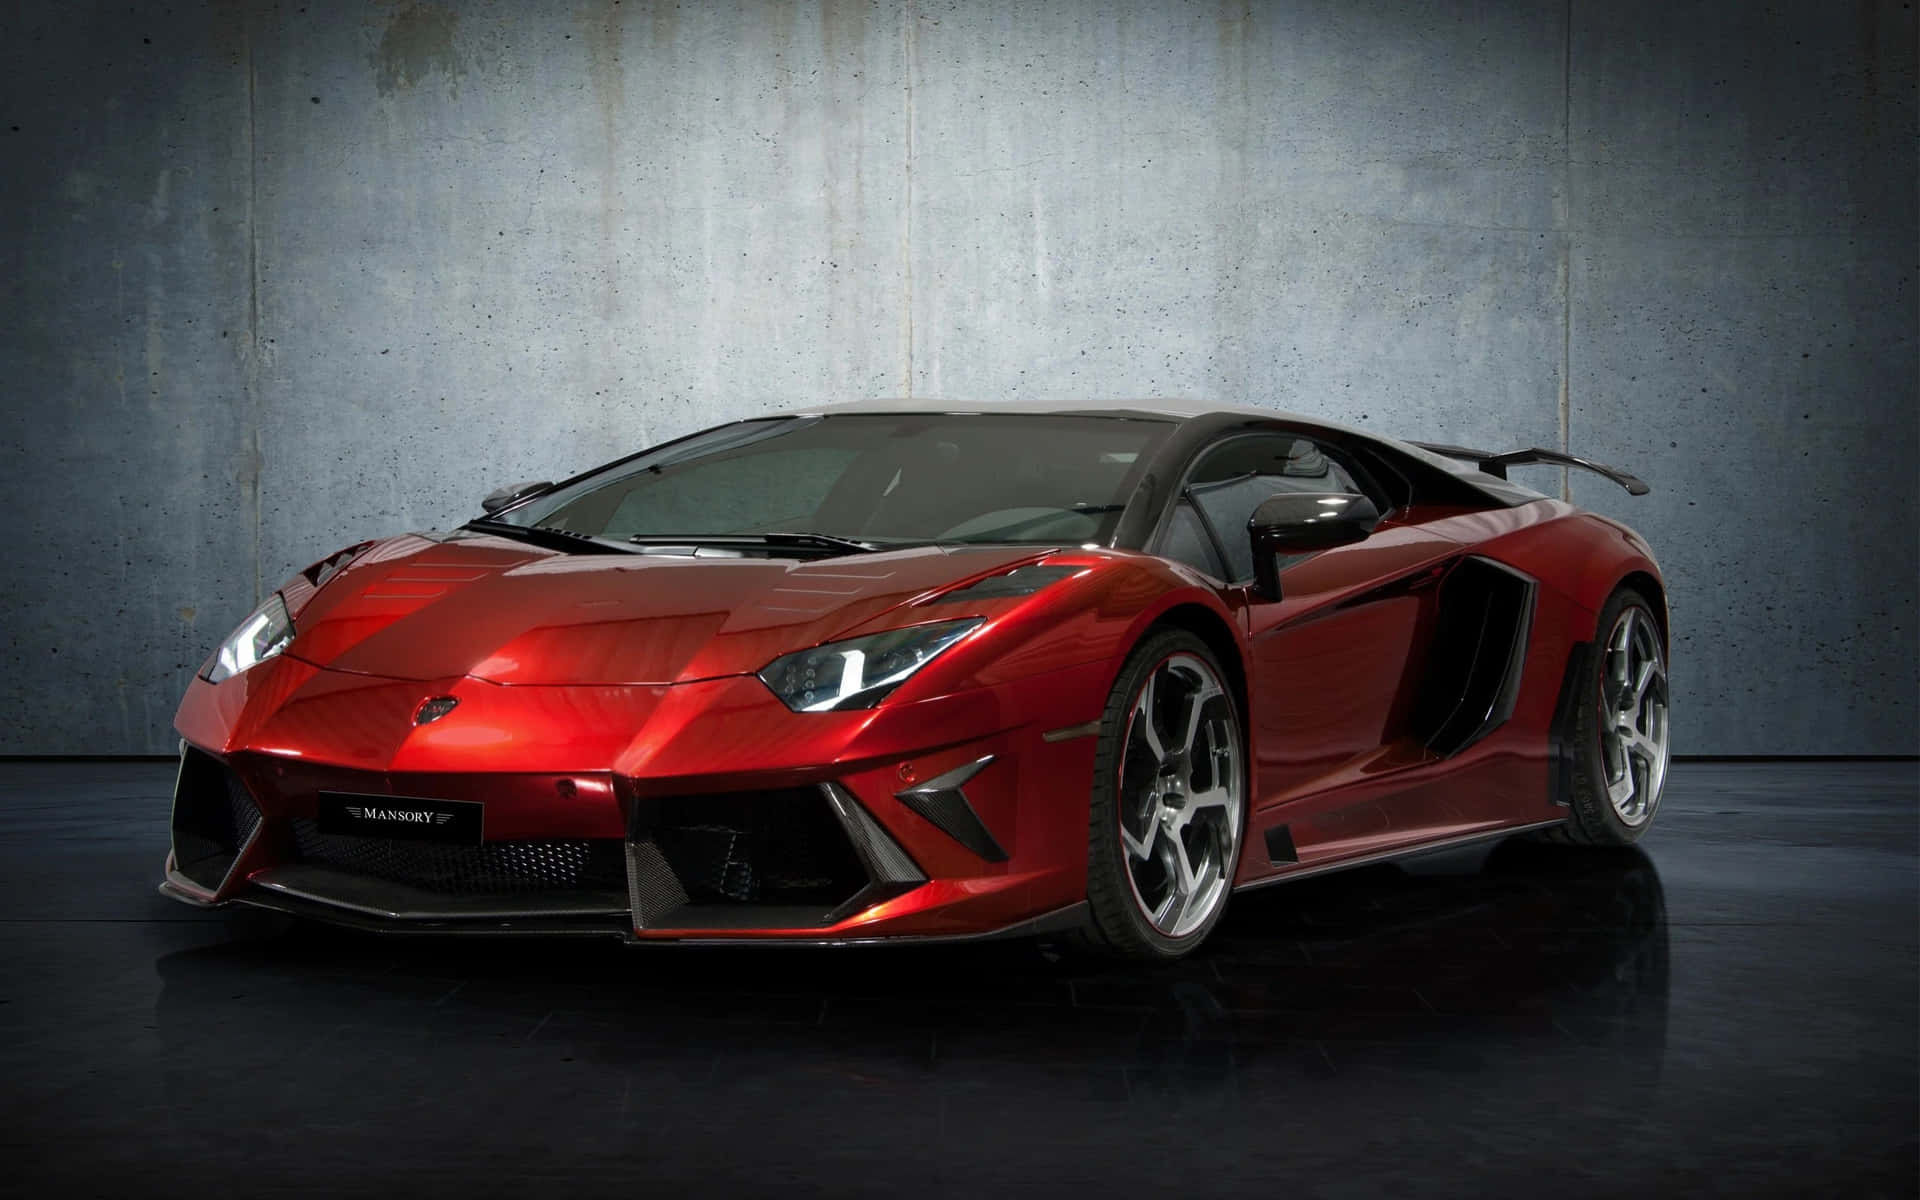 Explore Luxury with an Iconic Lamborghini